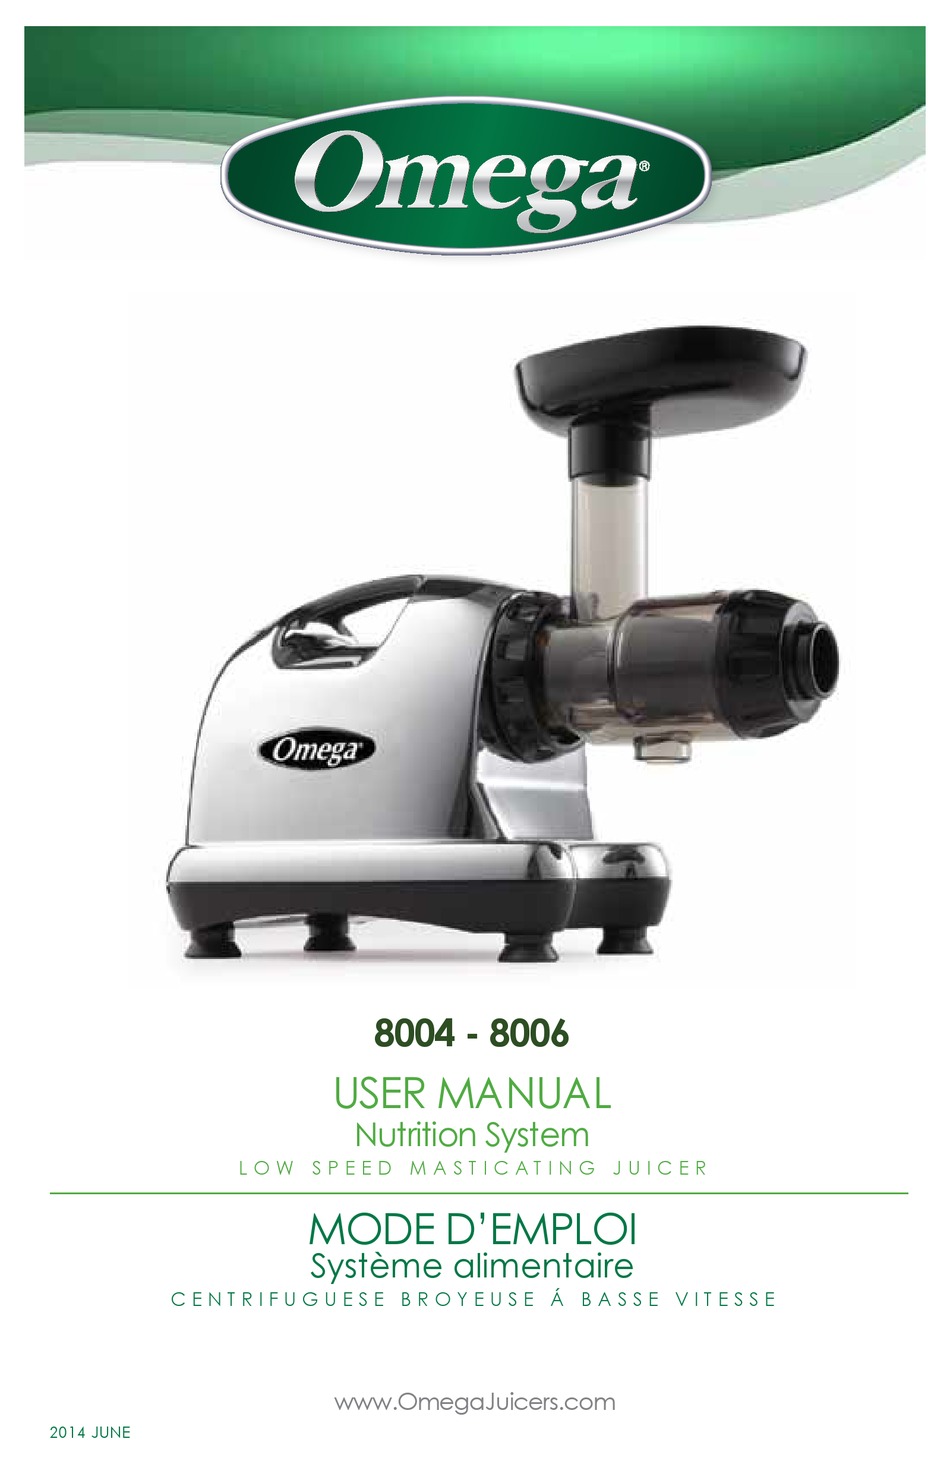 OMEGA 8004 USER MANUAL Pdf Download | ManualsLib